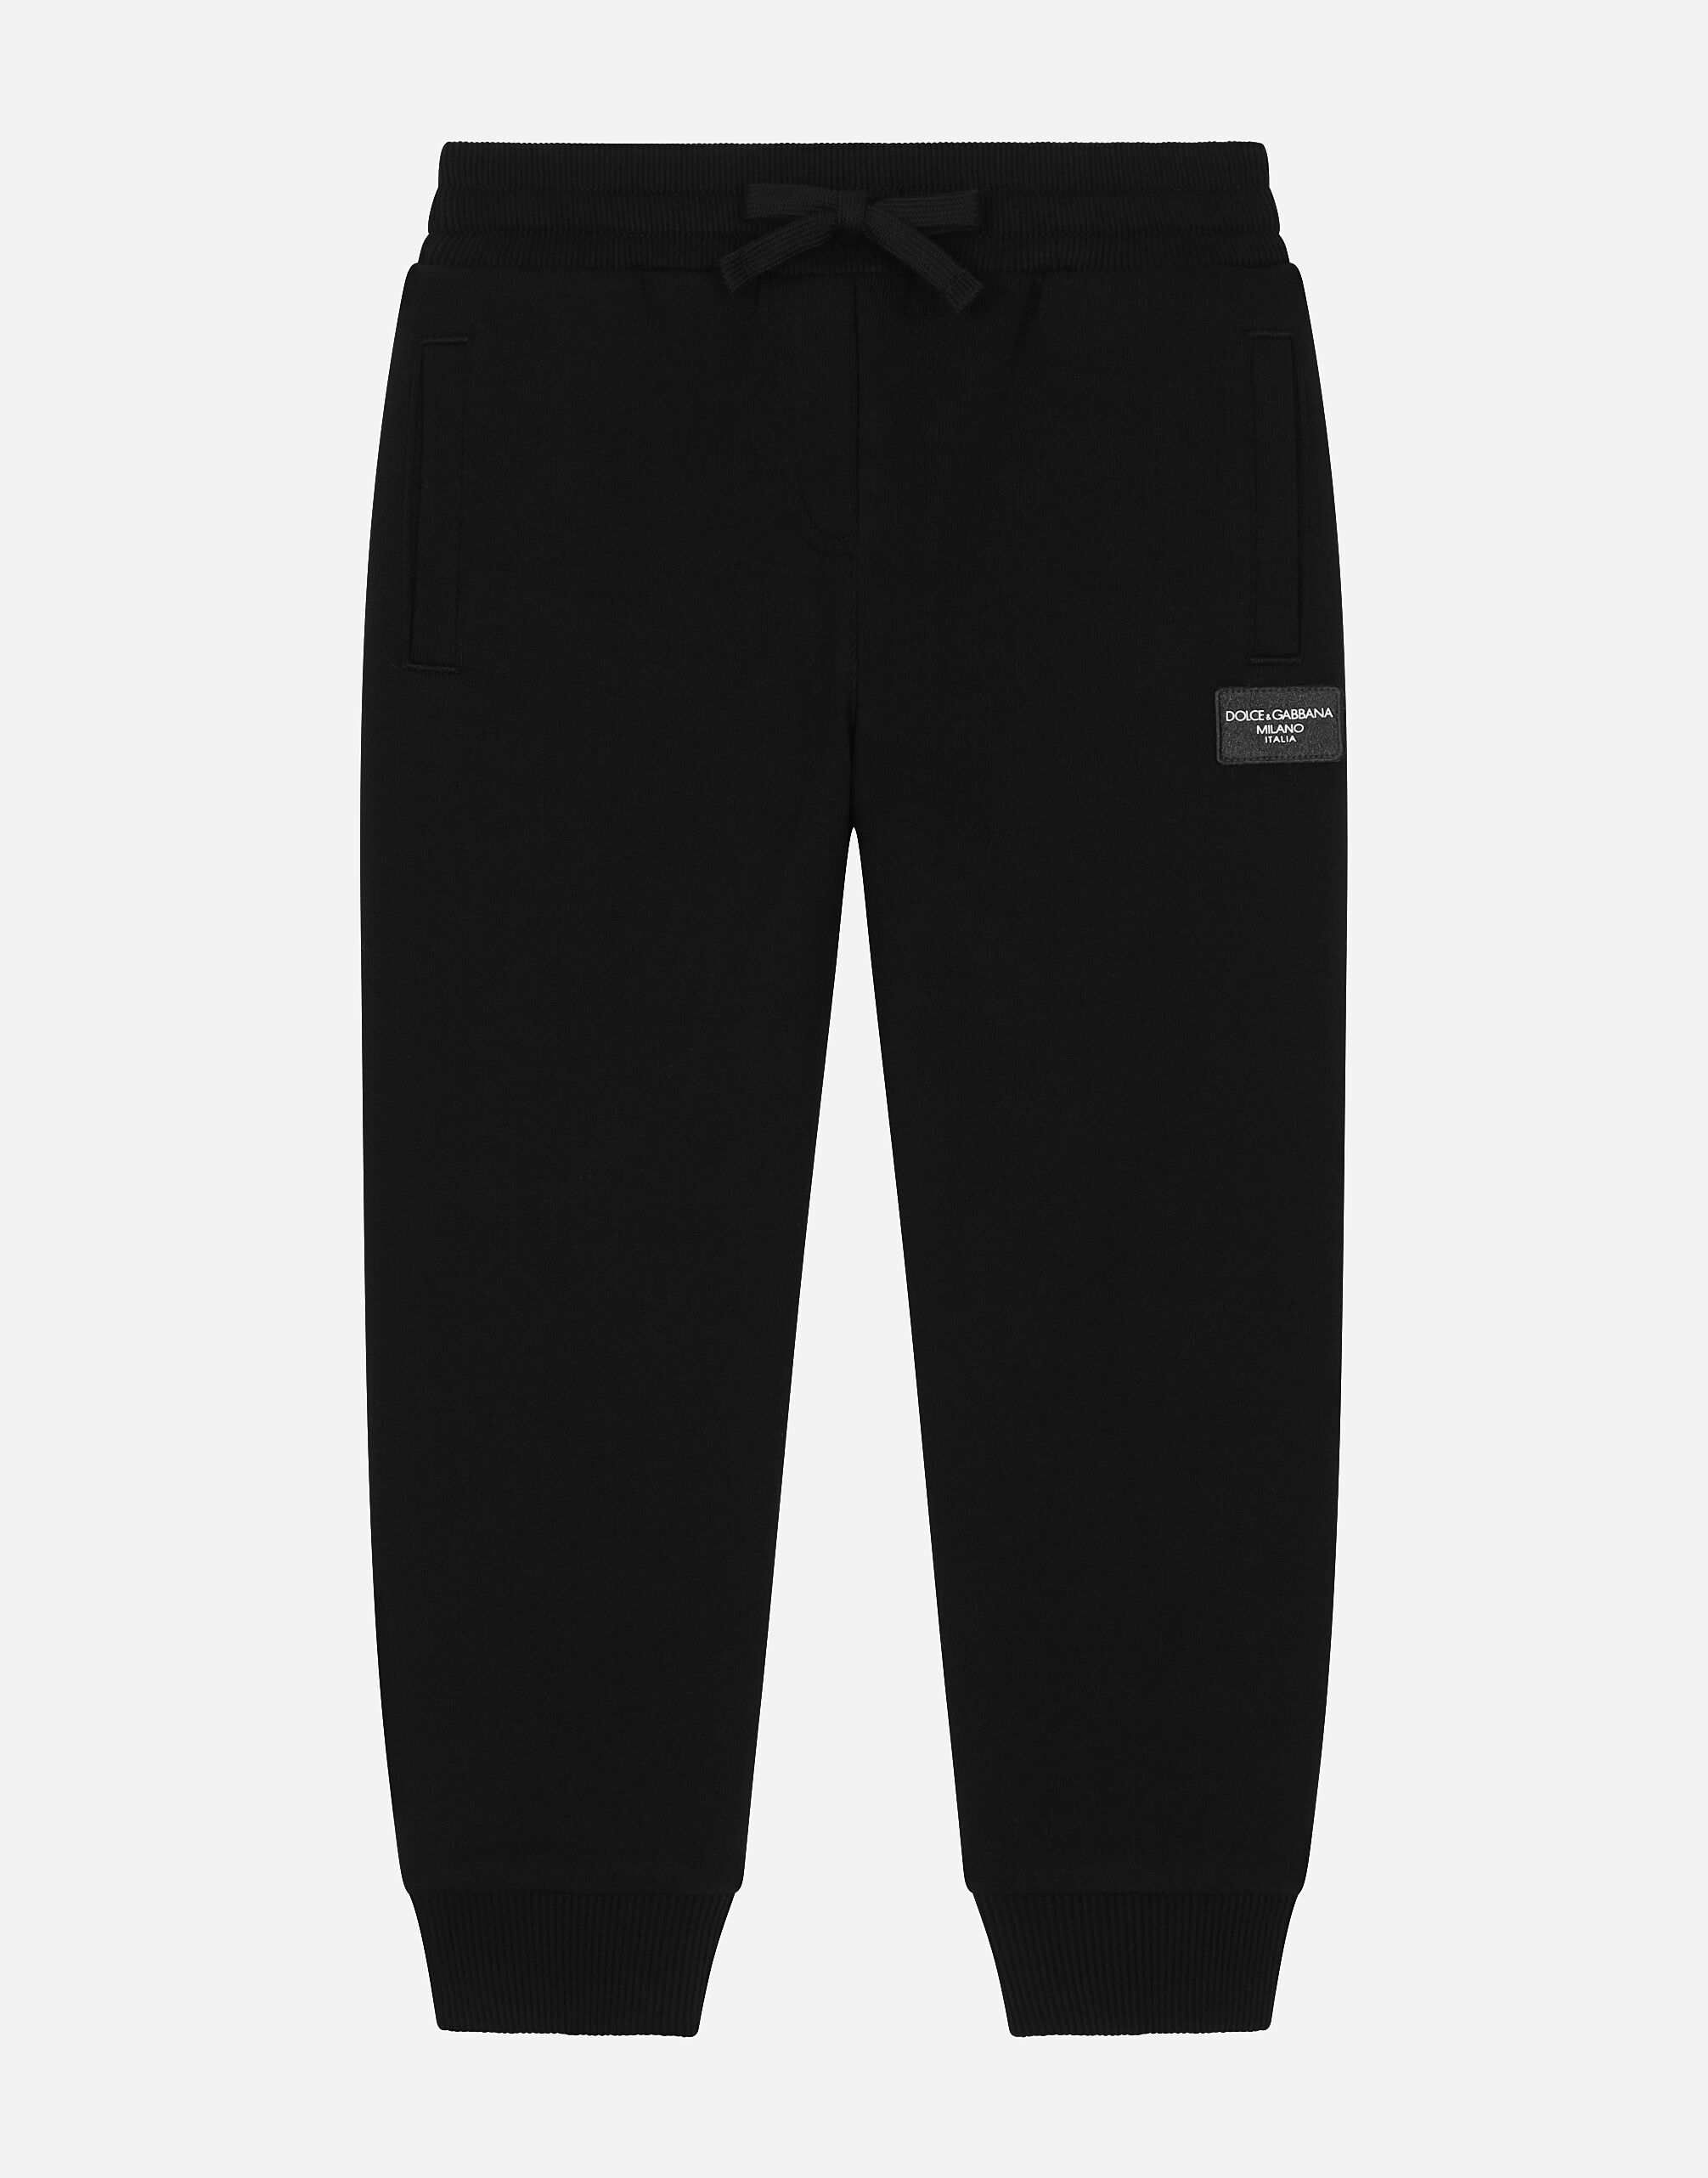 Dolce & Gabbana Jersey jogging pants with logo patch Print L5JP5BHPGF4